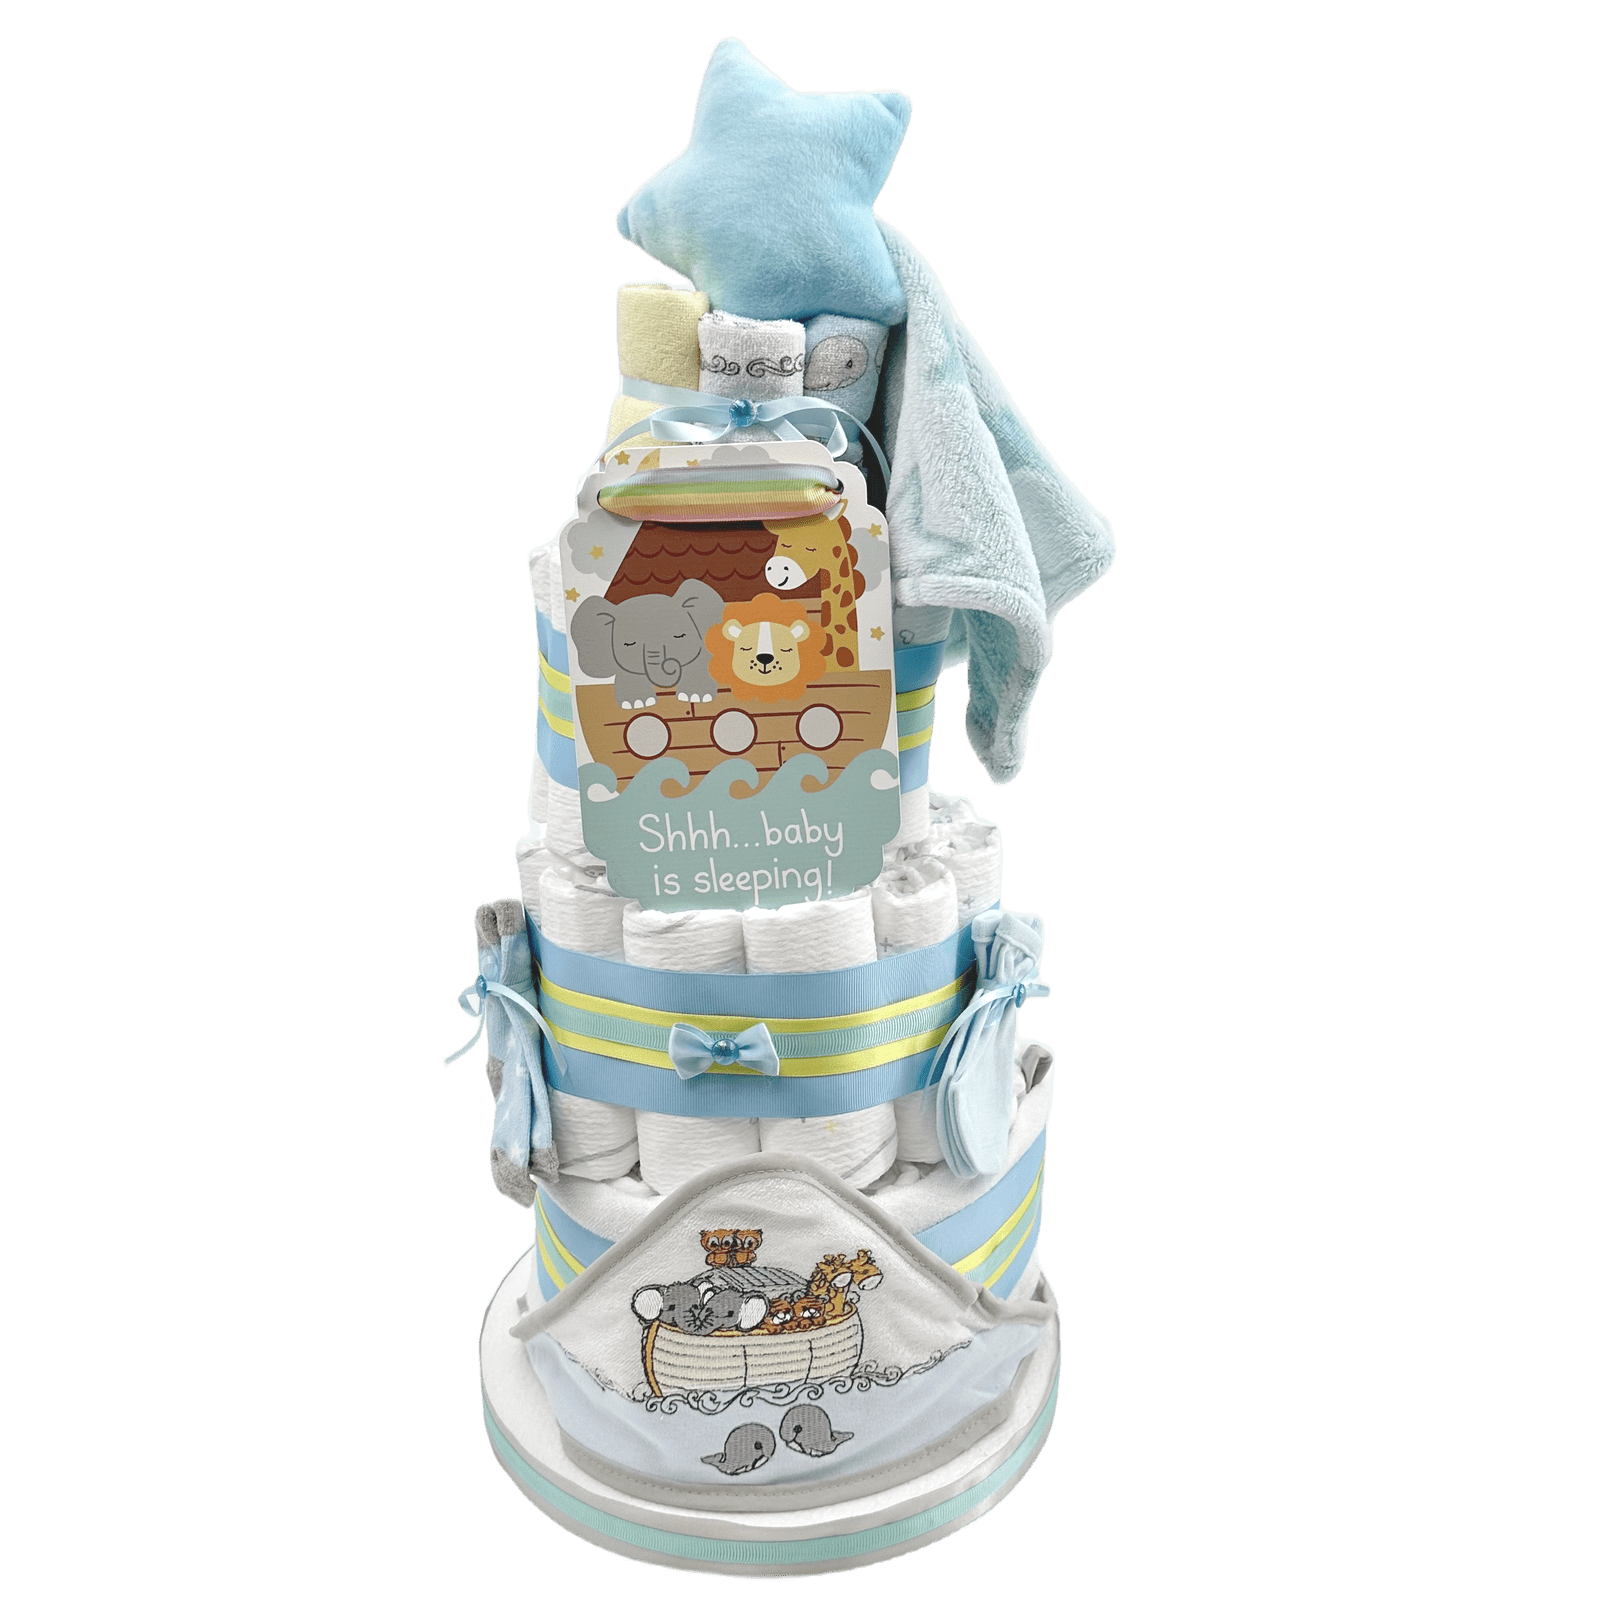 Baby Boy Diaper Cake, 3 tier, Blue Bow, Baby Shower Gift Centerpiece | eBay